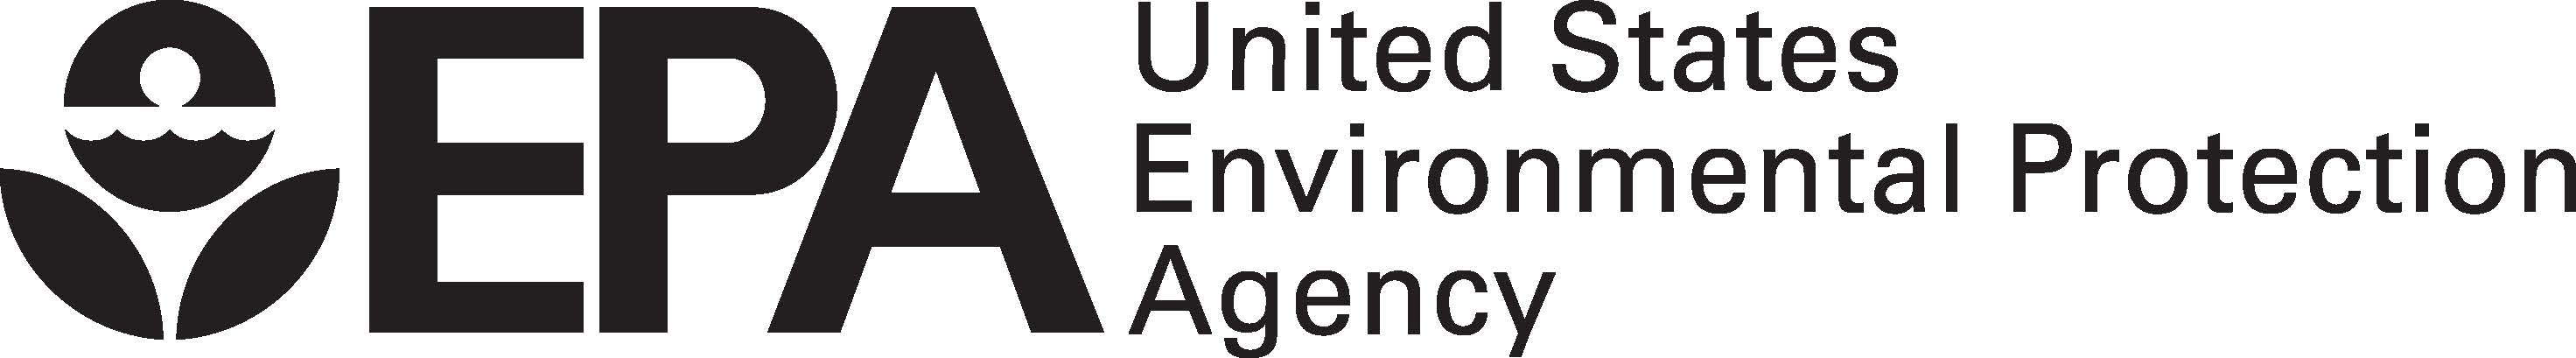 EPA United STates Environmental Protection Agency